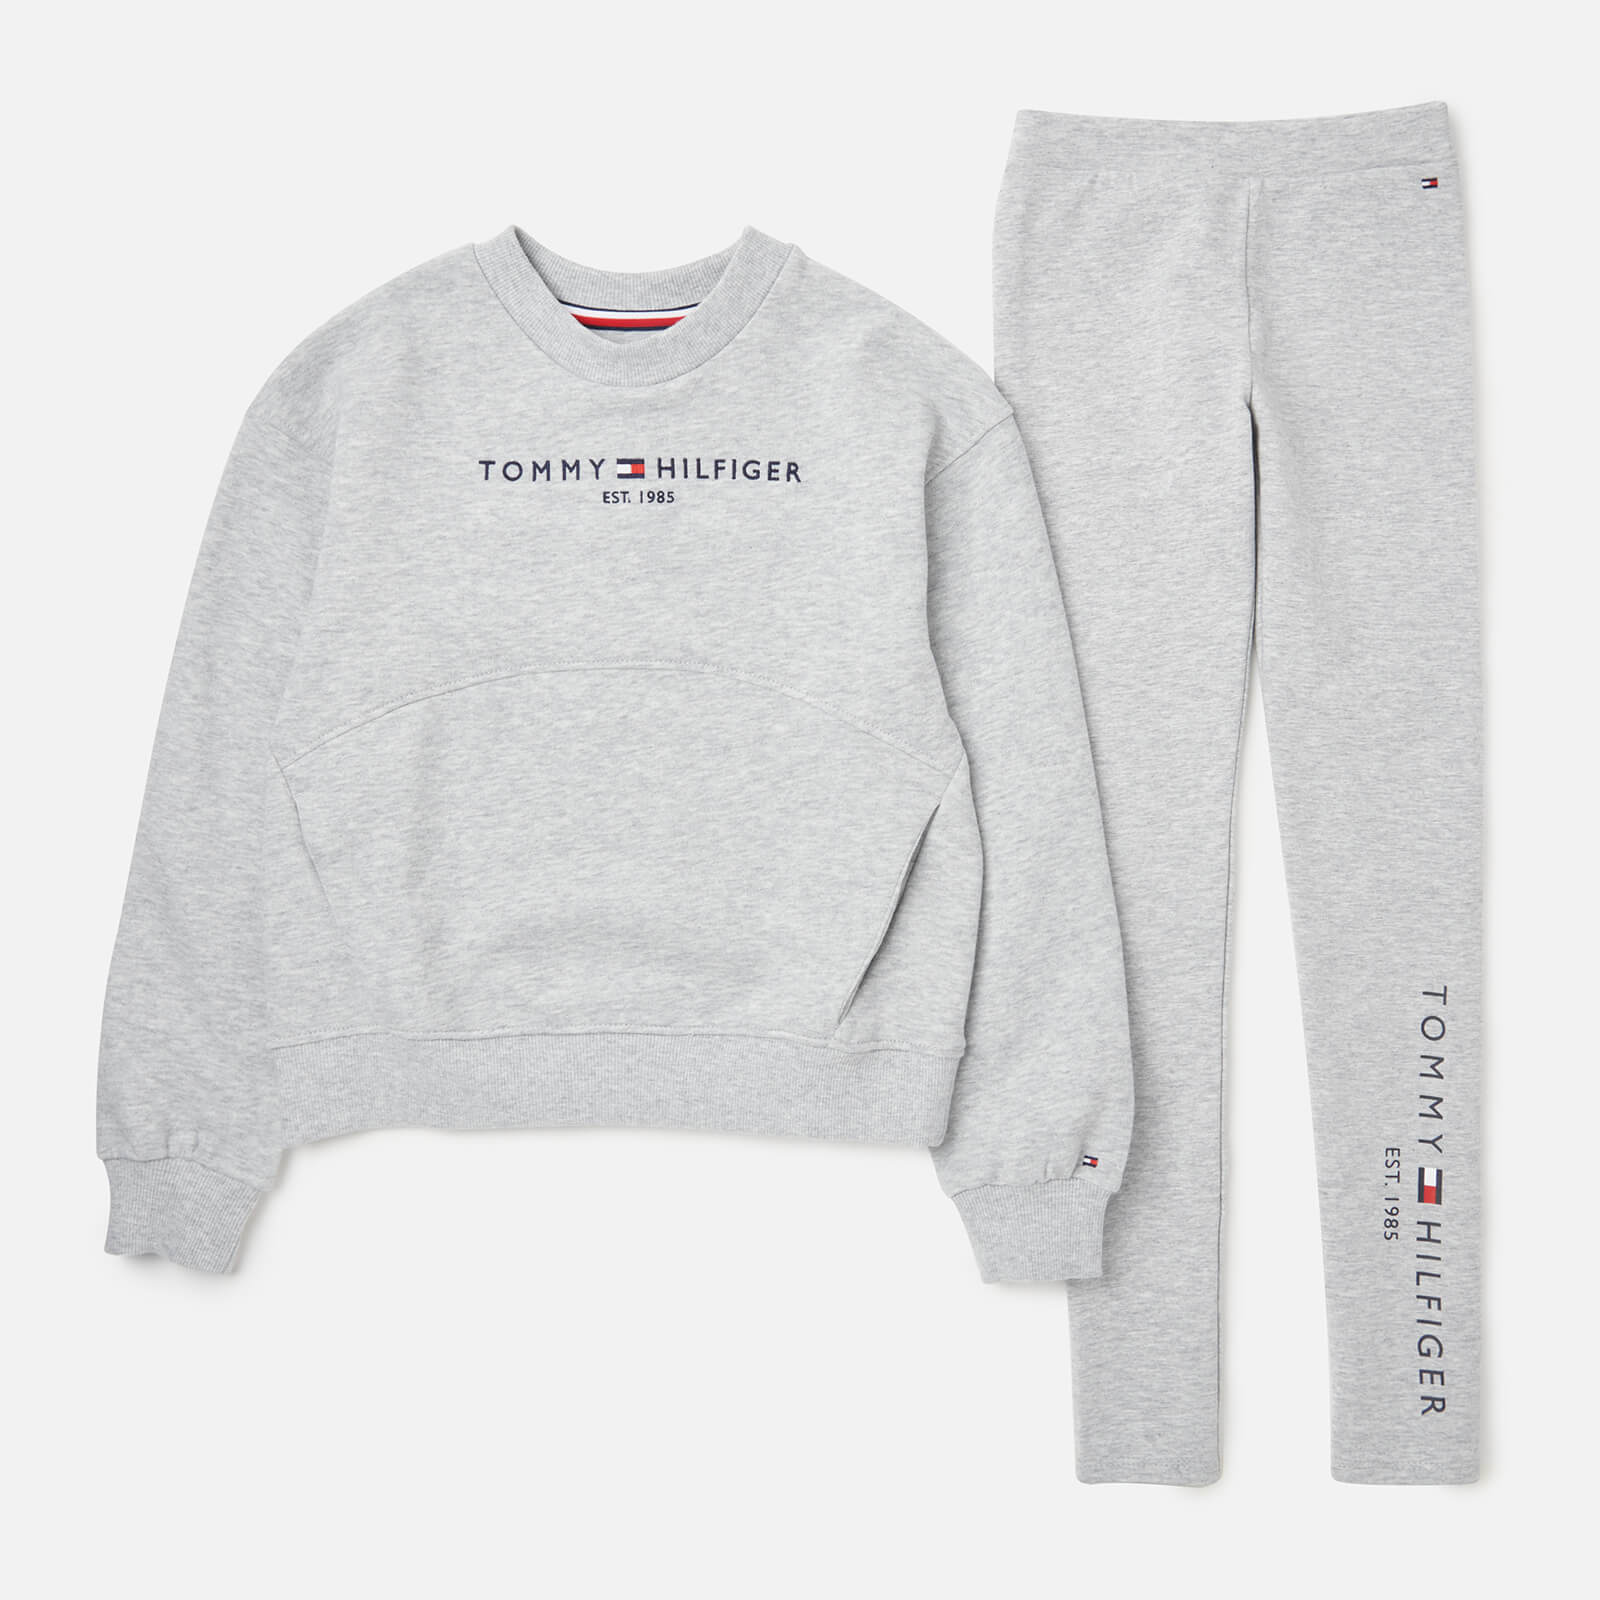 Tommy Hilfiger Girls' Essential Sweatshirt and Leggings Set - Grey Heather - 6 Years